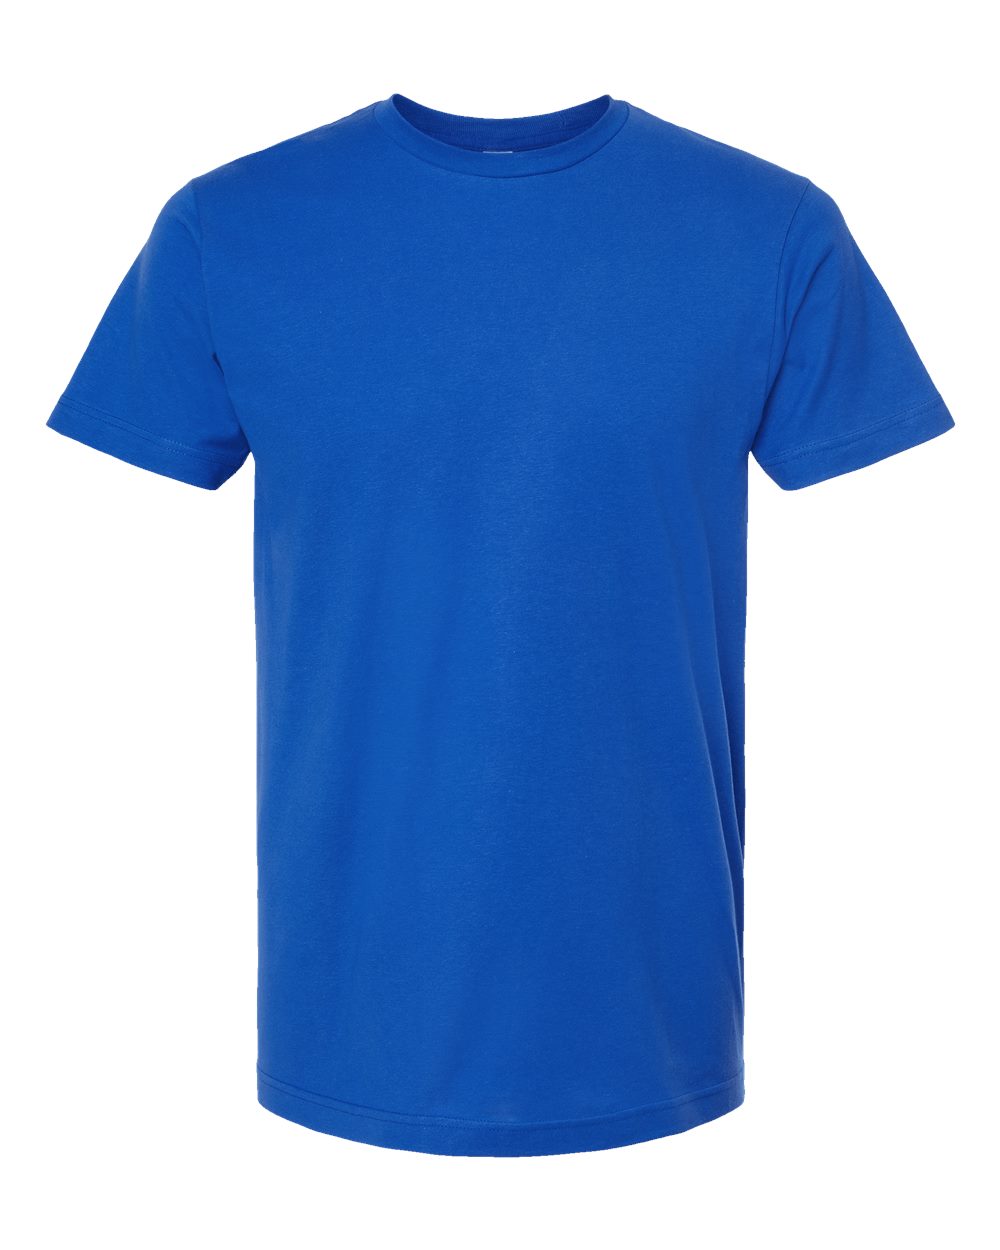 Pretreated Tultex 202 Unisex Fine Jersey T-Shirt - Royal